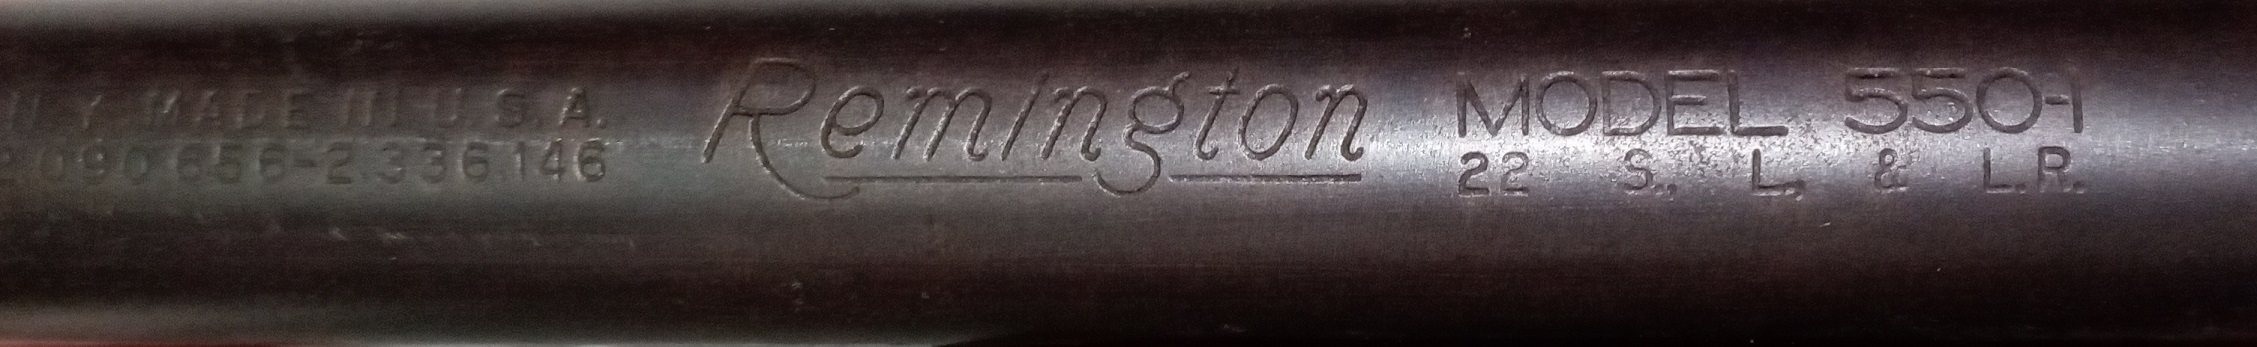 Remington Model 550-1  22  S., L., LR.jpg